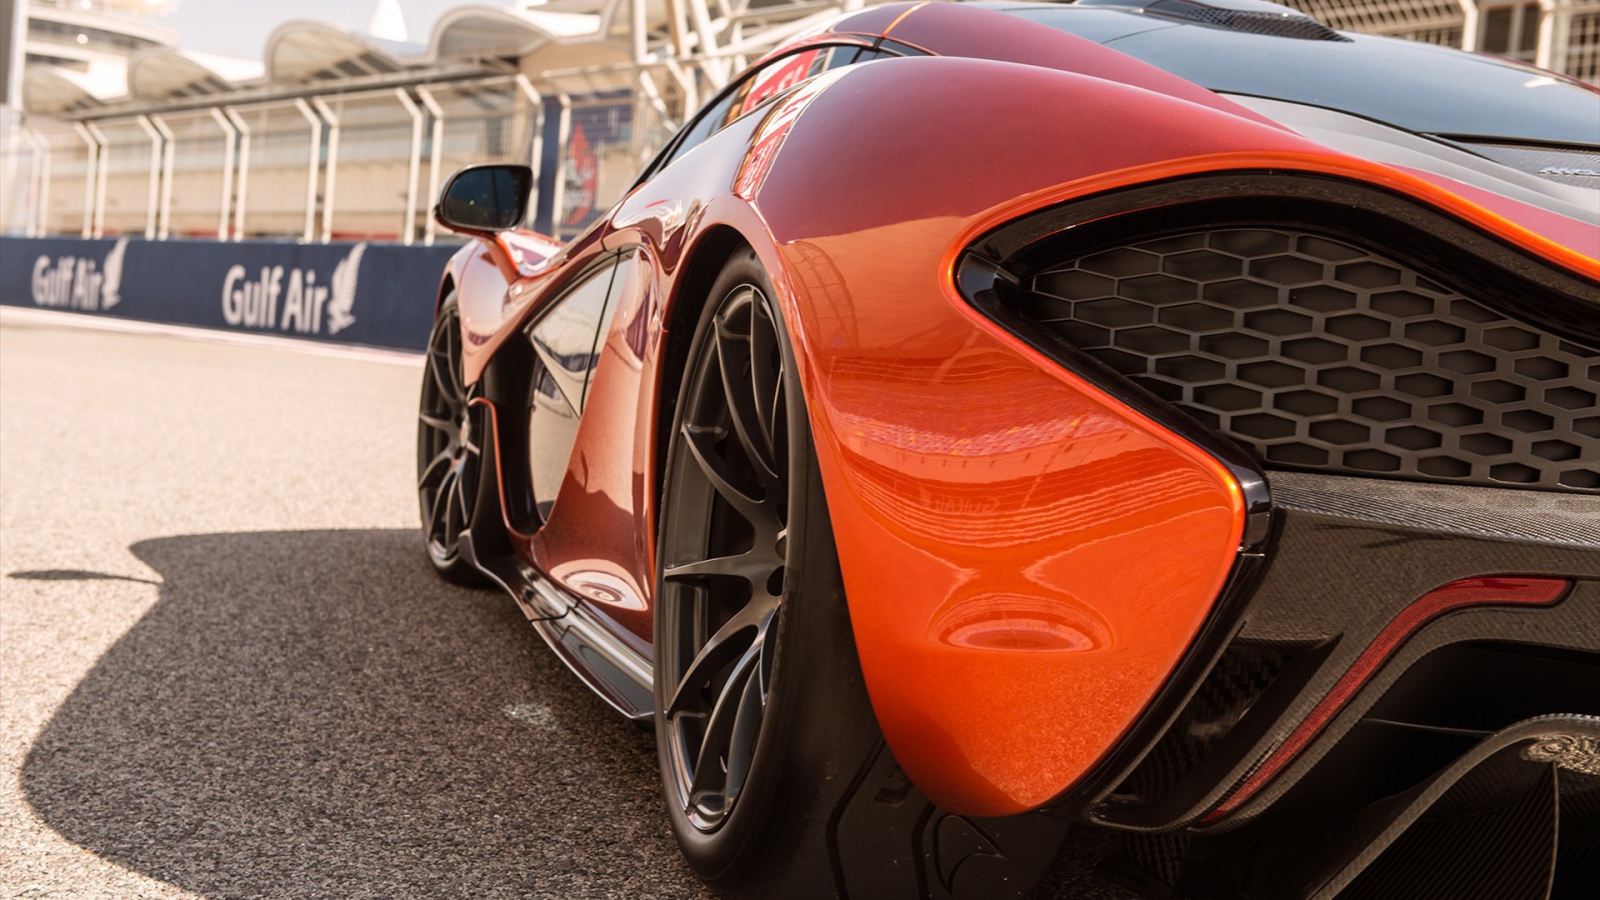 Photo of a car McLaren P1 2014 